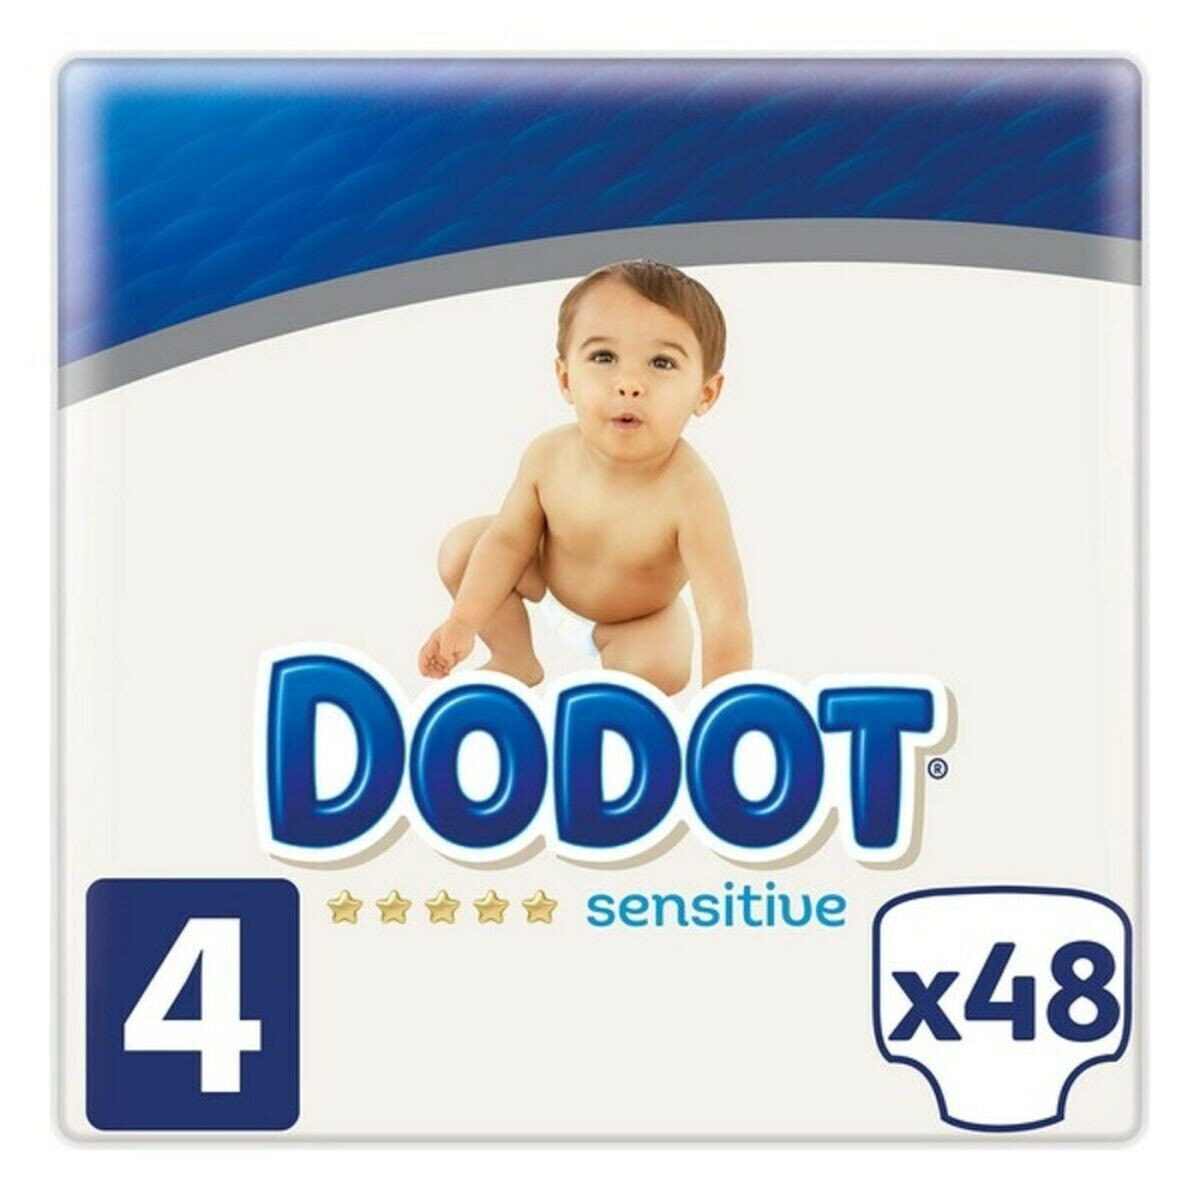 Disposable nappies Sensitive Dodot Dodot Sensitive (48 uds)